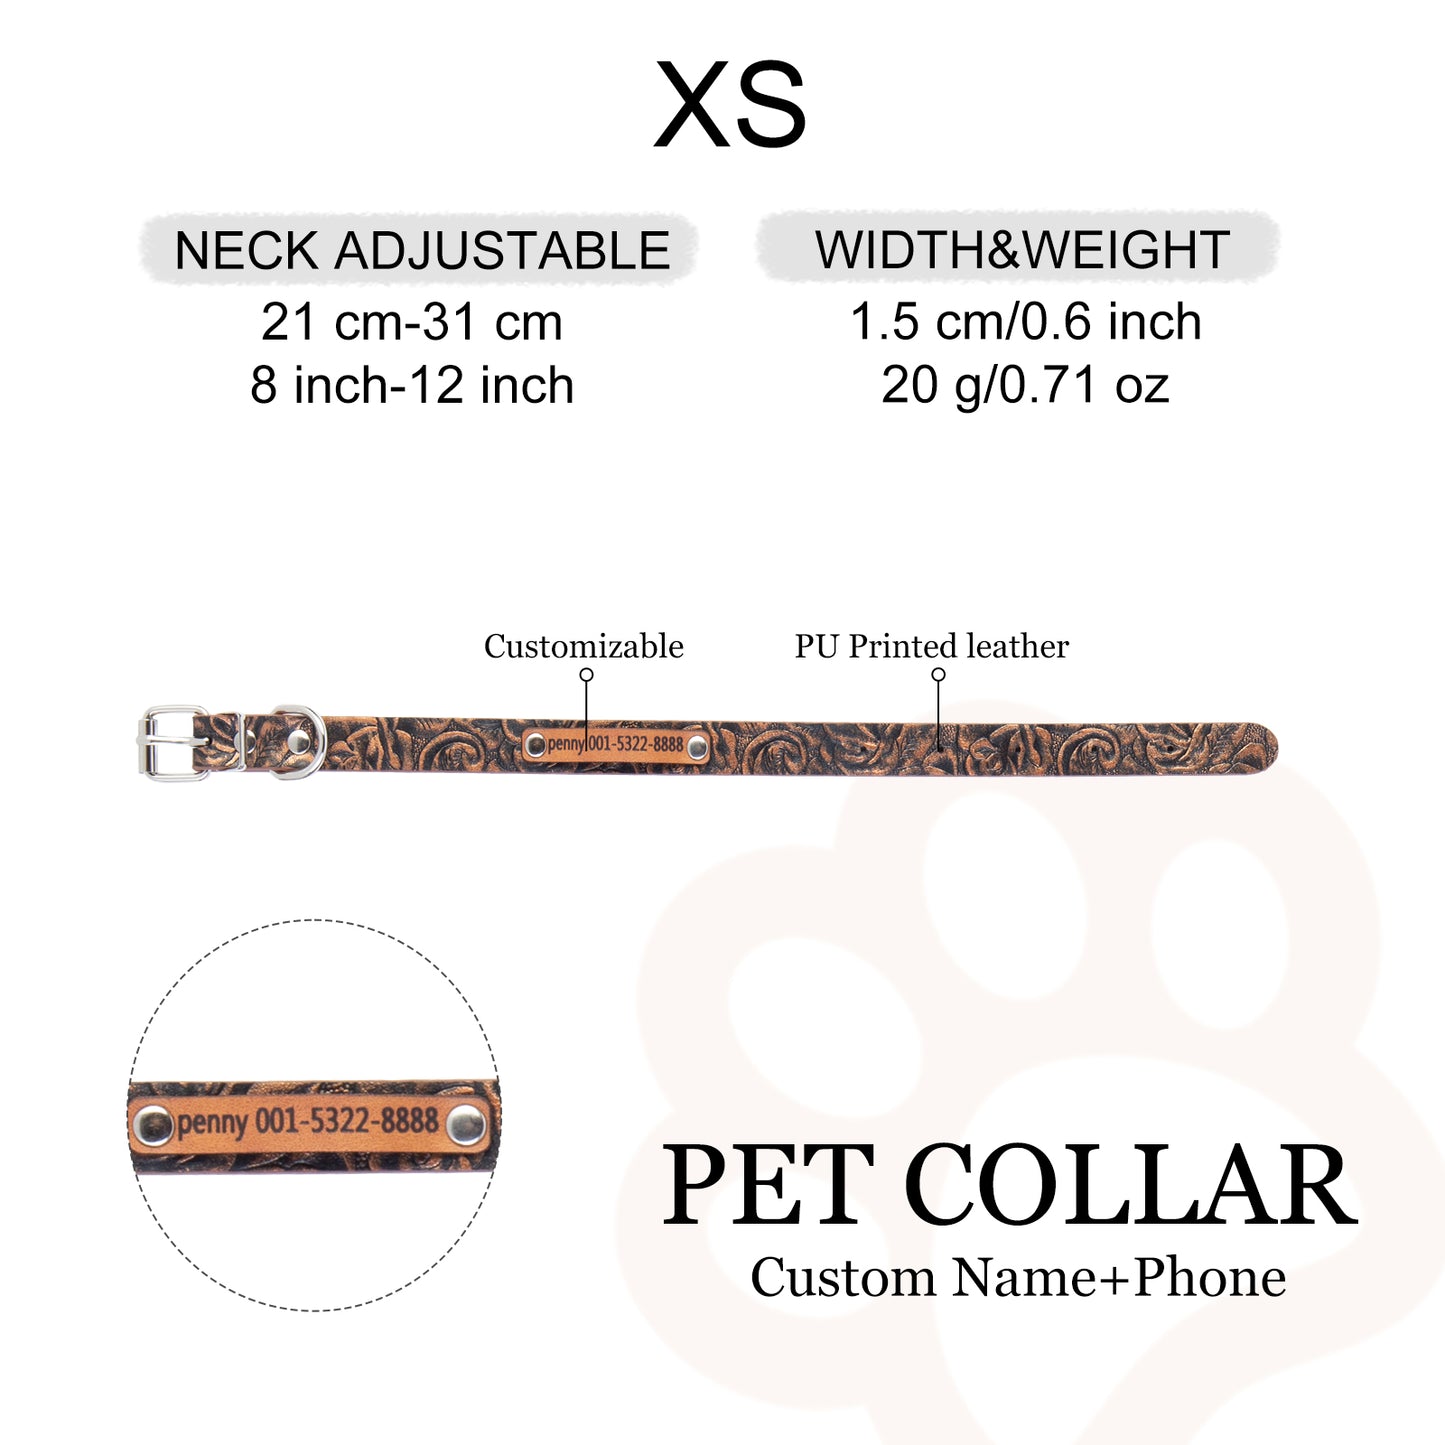 PU Leather Printed Pet Collar